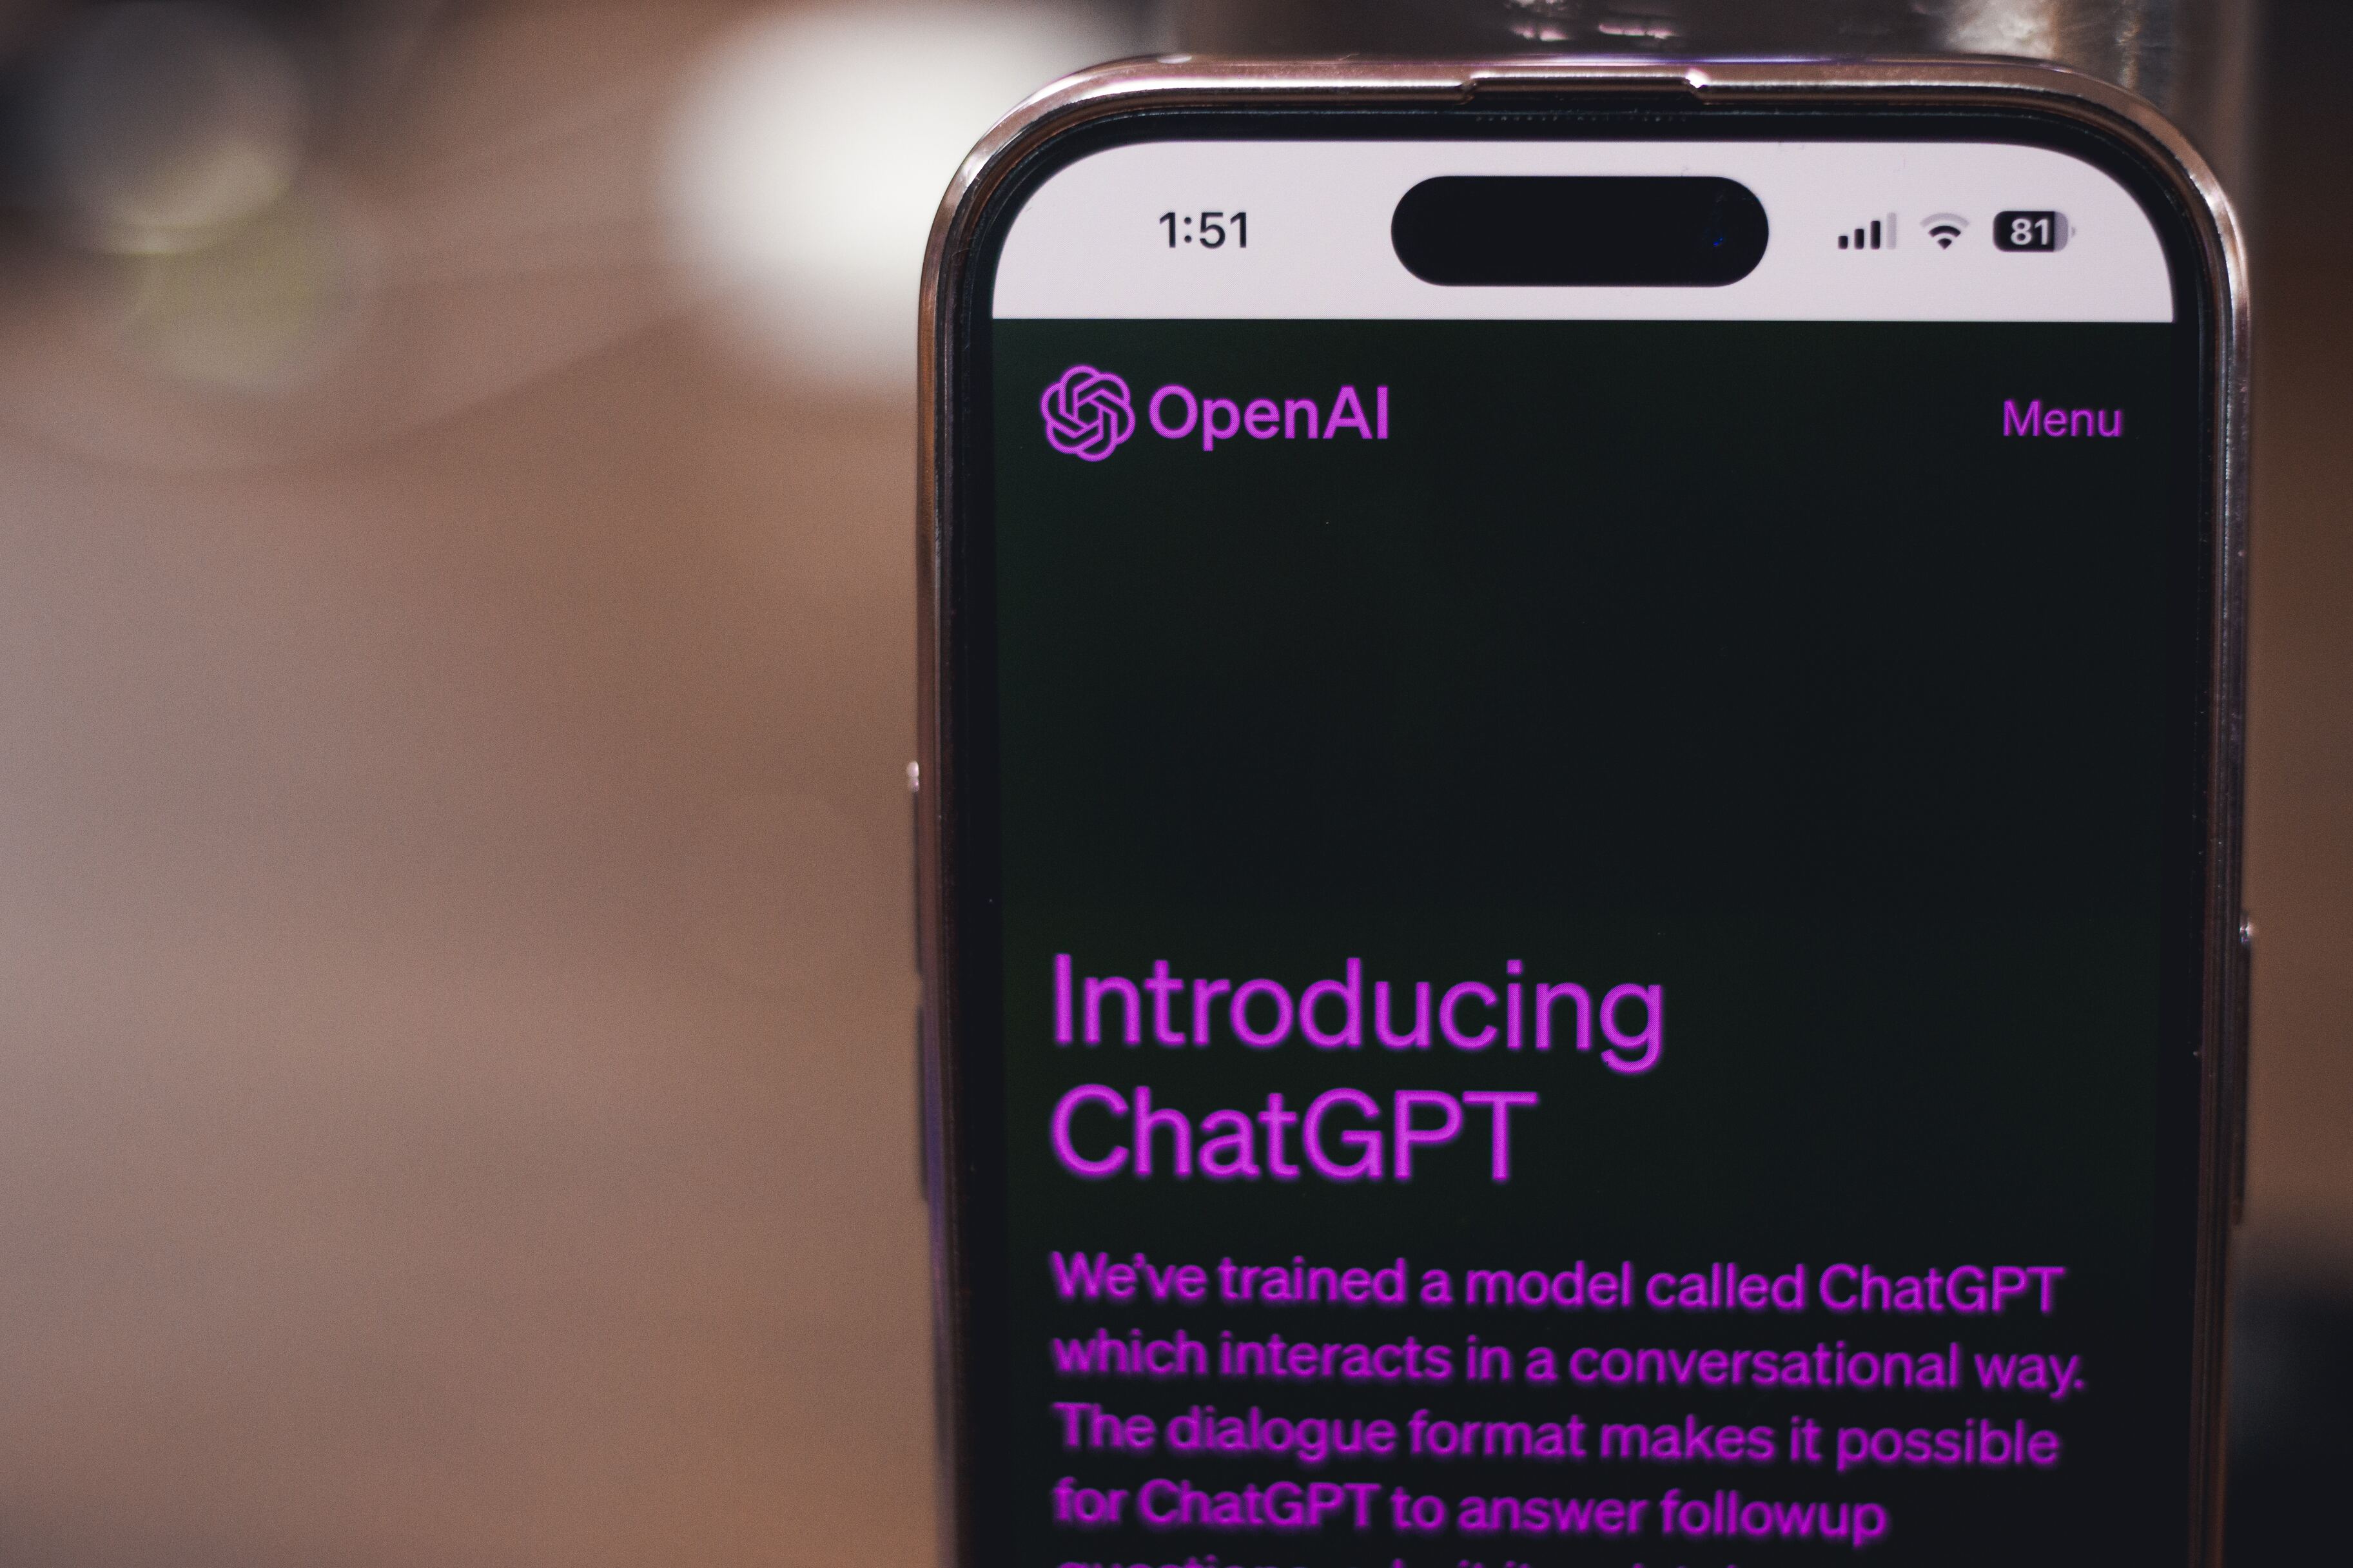   ChatGPT   OpenAI    $540 